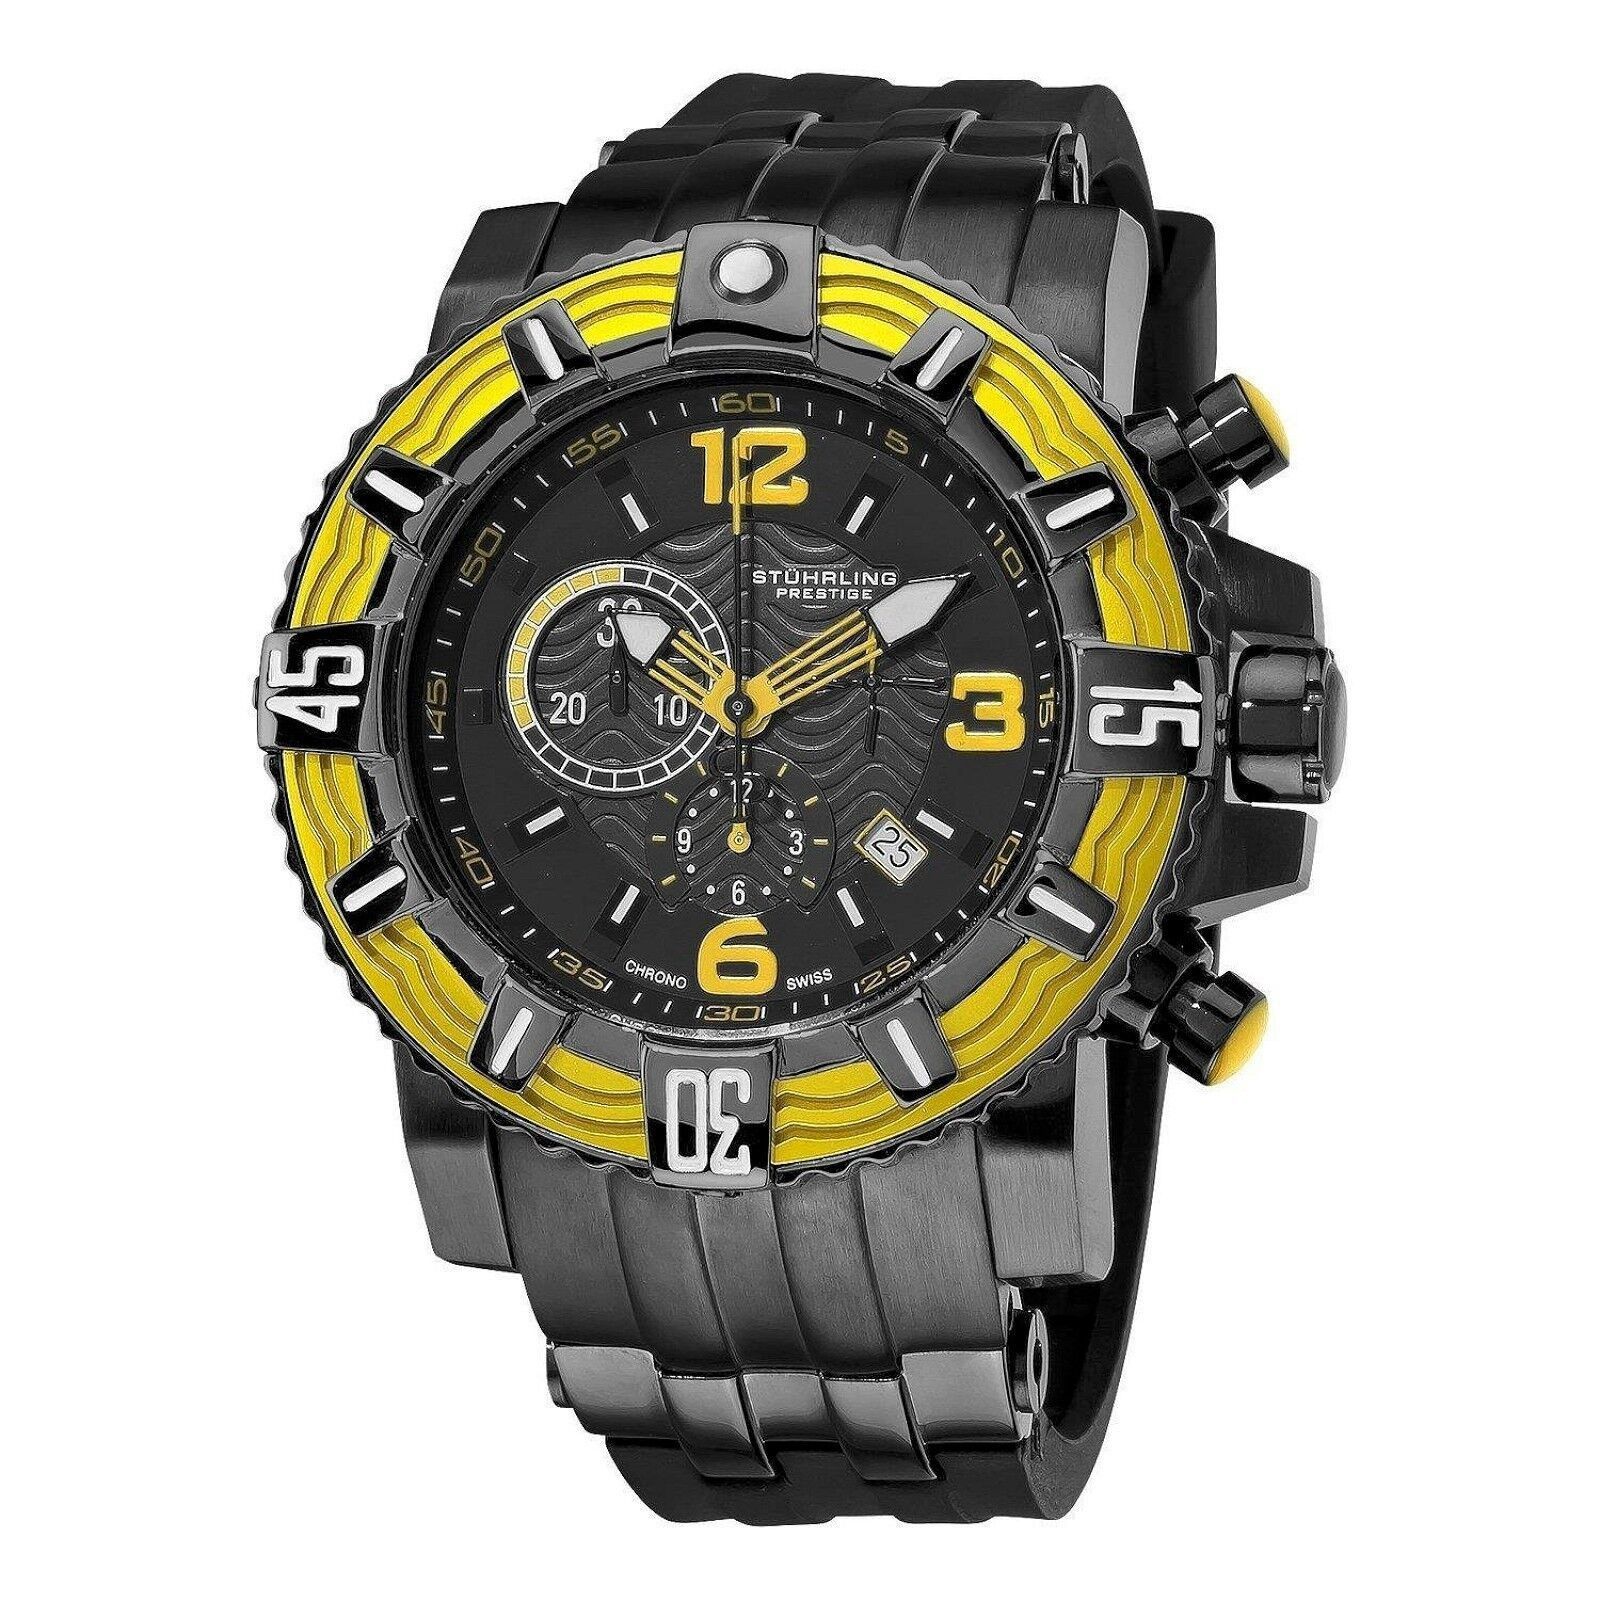 NEW Stuhrling Original 319127.115 Men's AQUADIVER MARINE PRO Black/Yellow Watch - $148.45